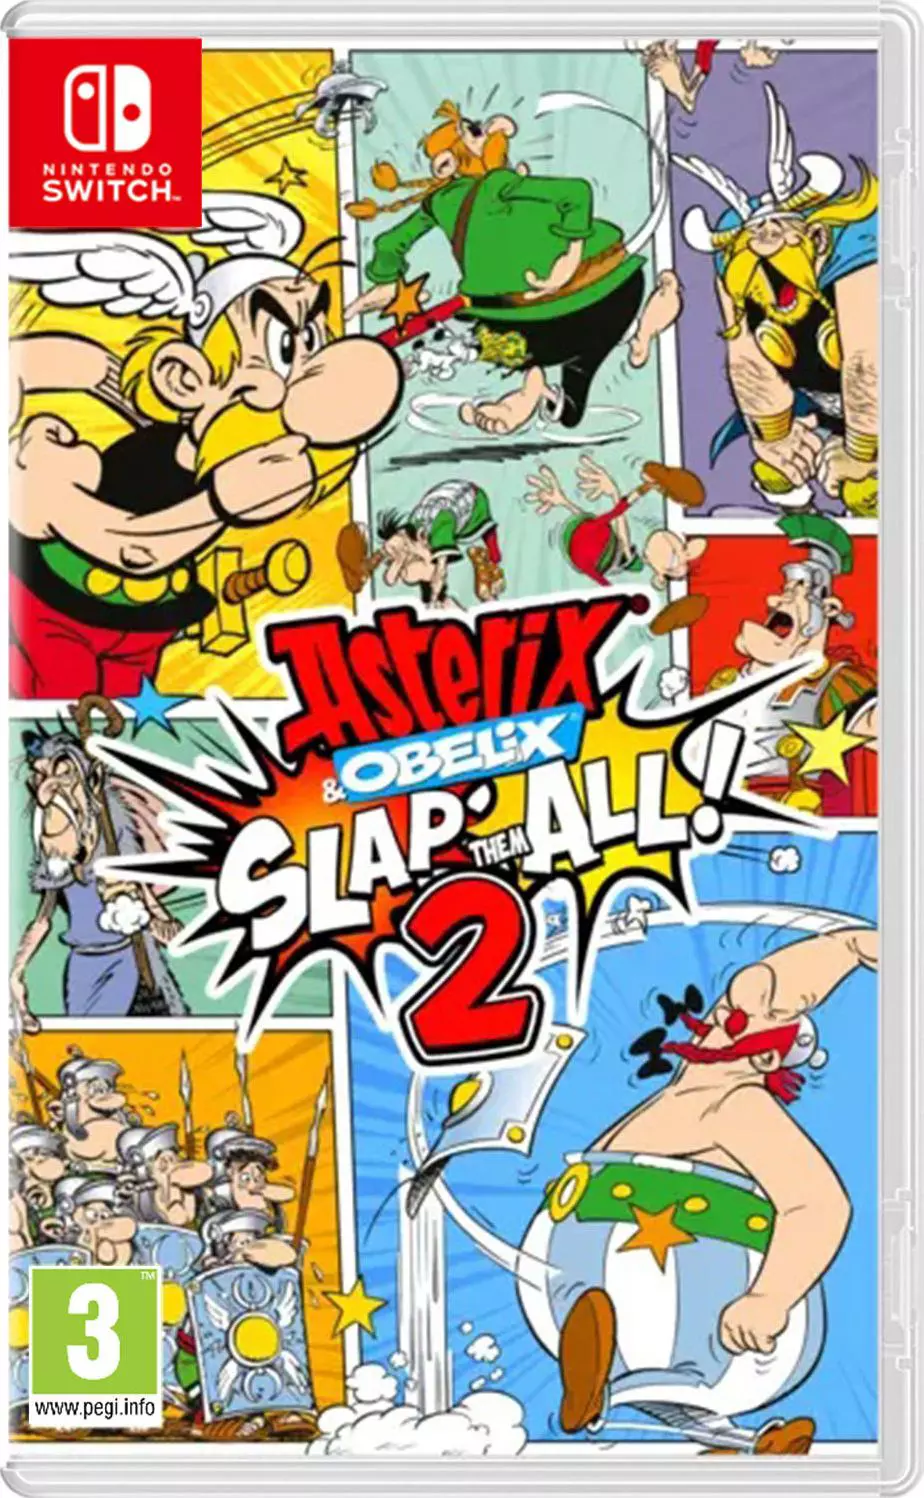 Asterixobelix: Slap Them All!